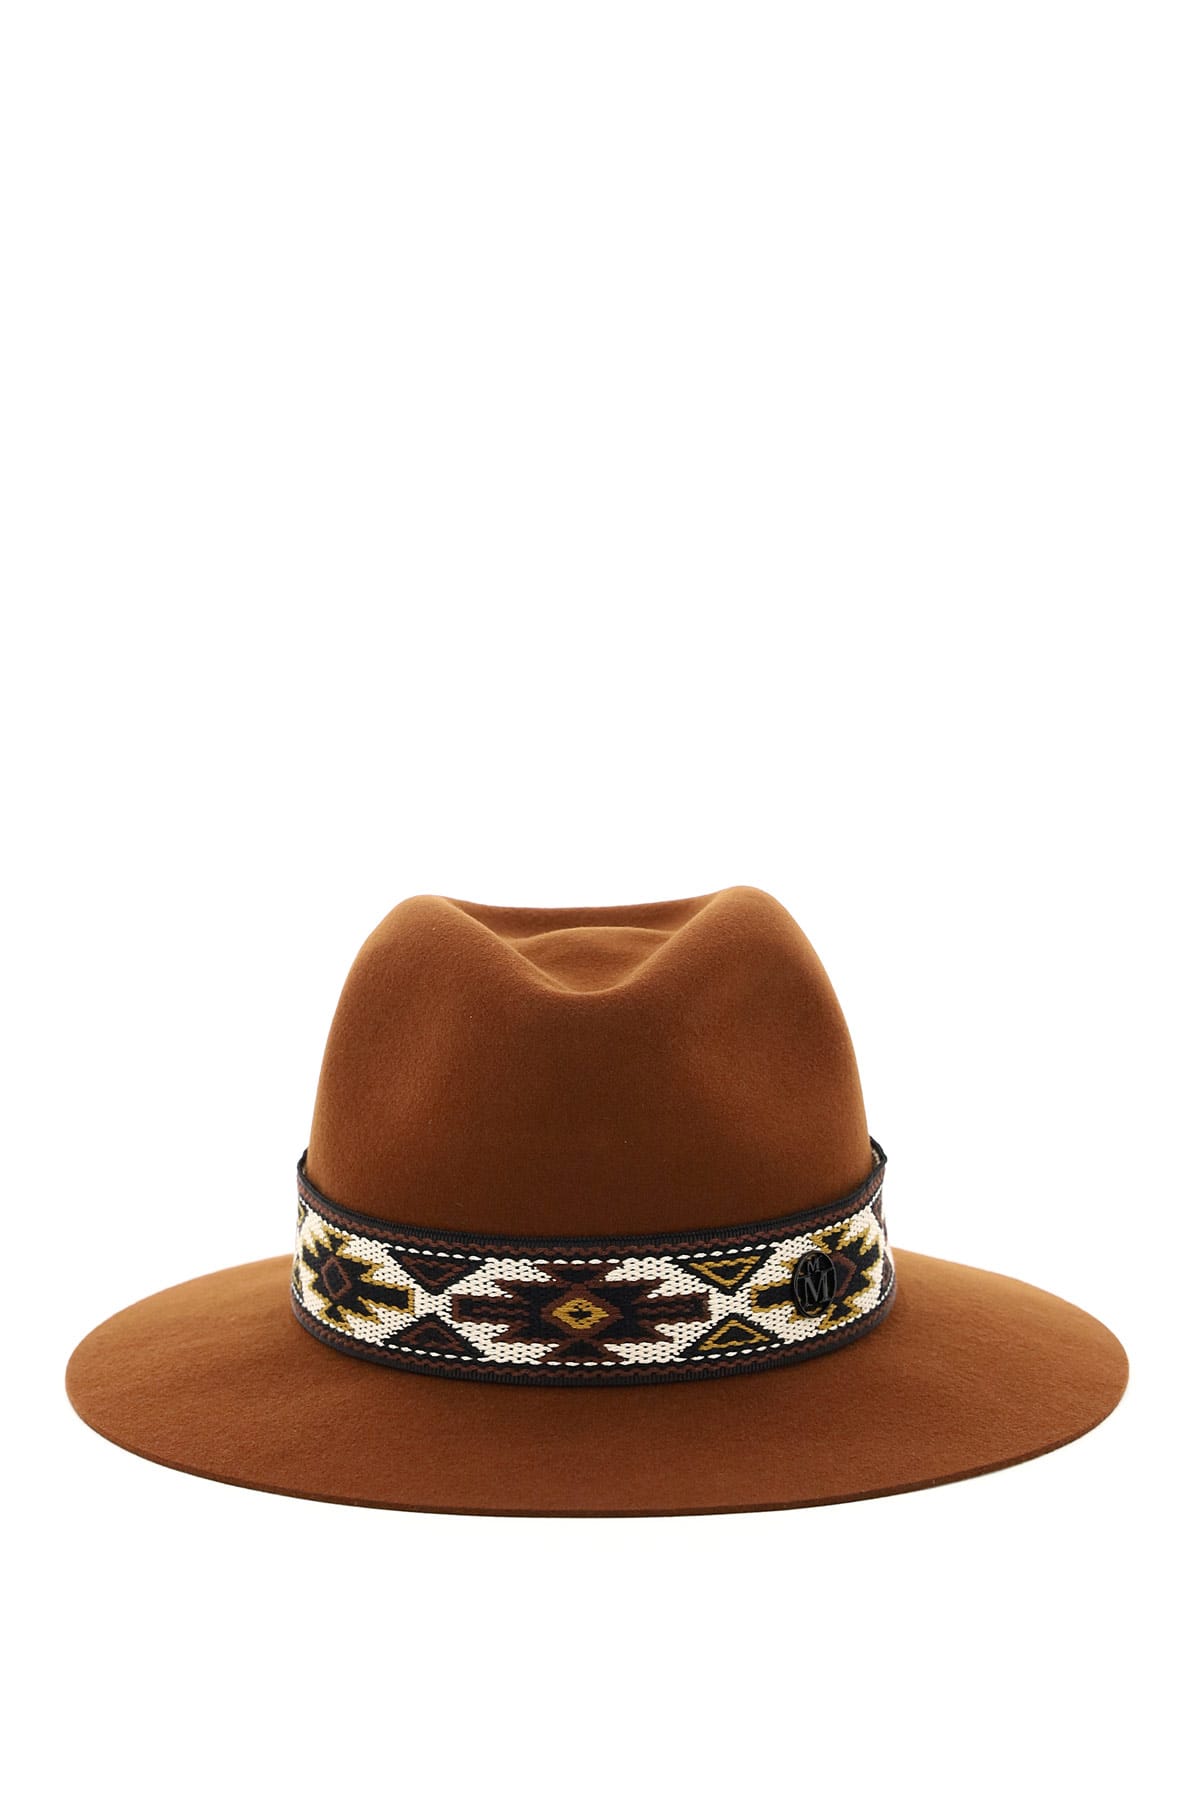 Maison Michel Fedora Rico Indian Ribbon Felt Hat